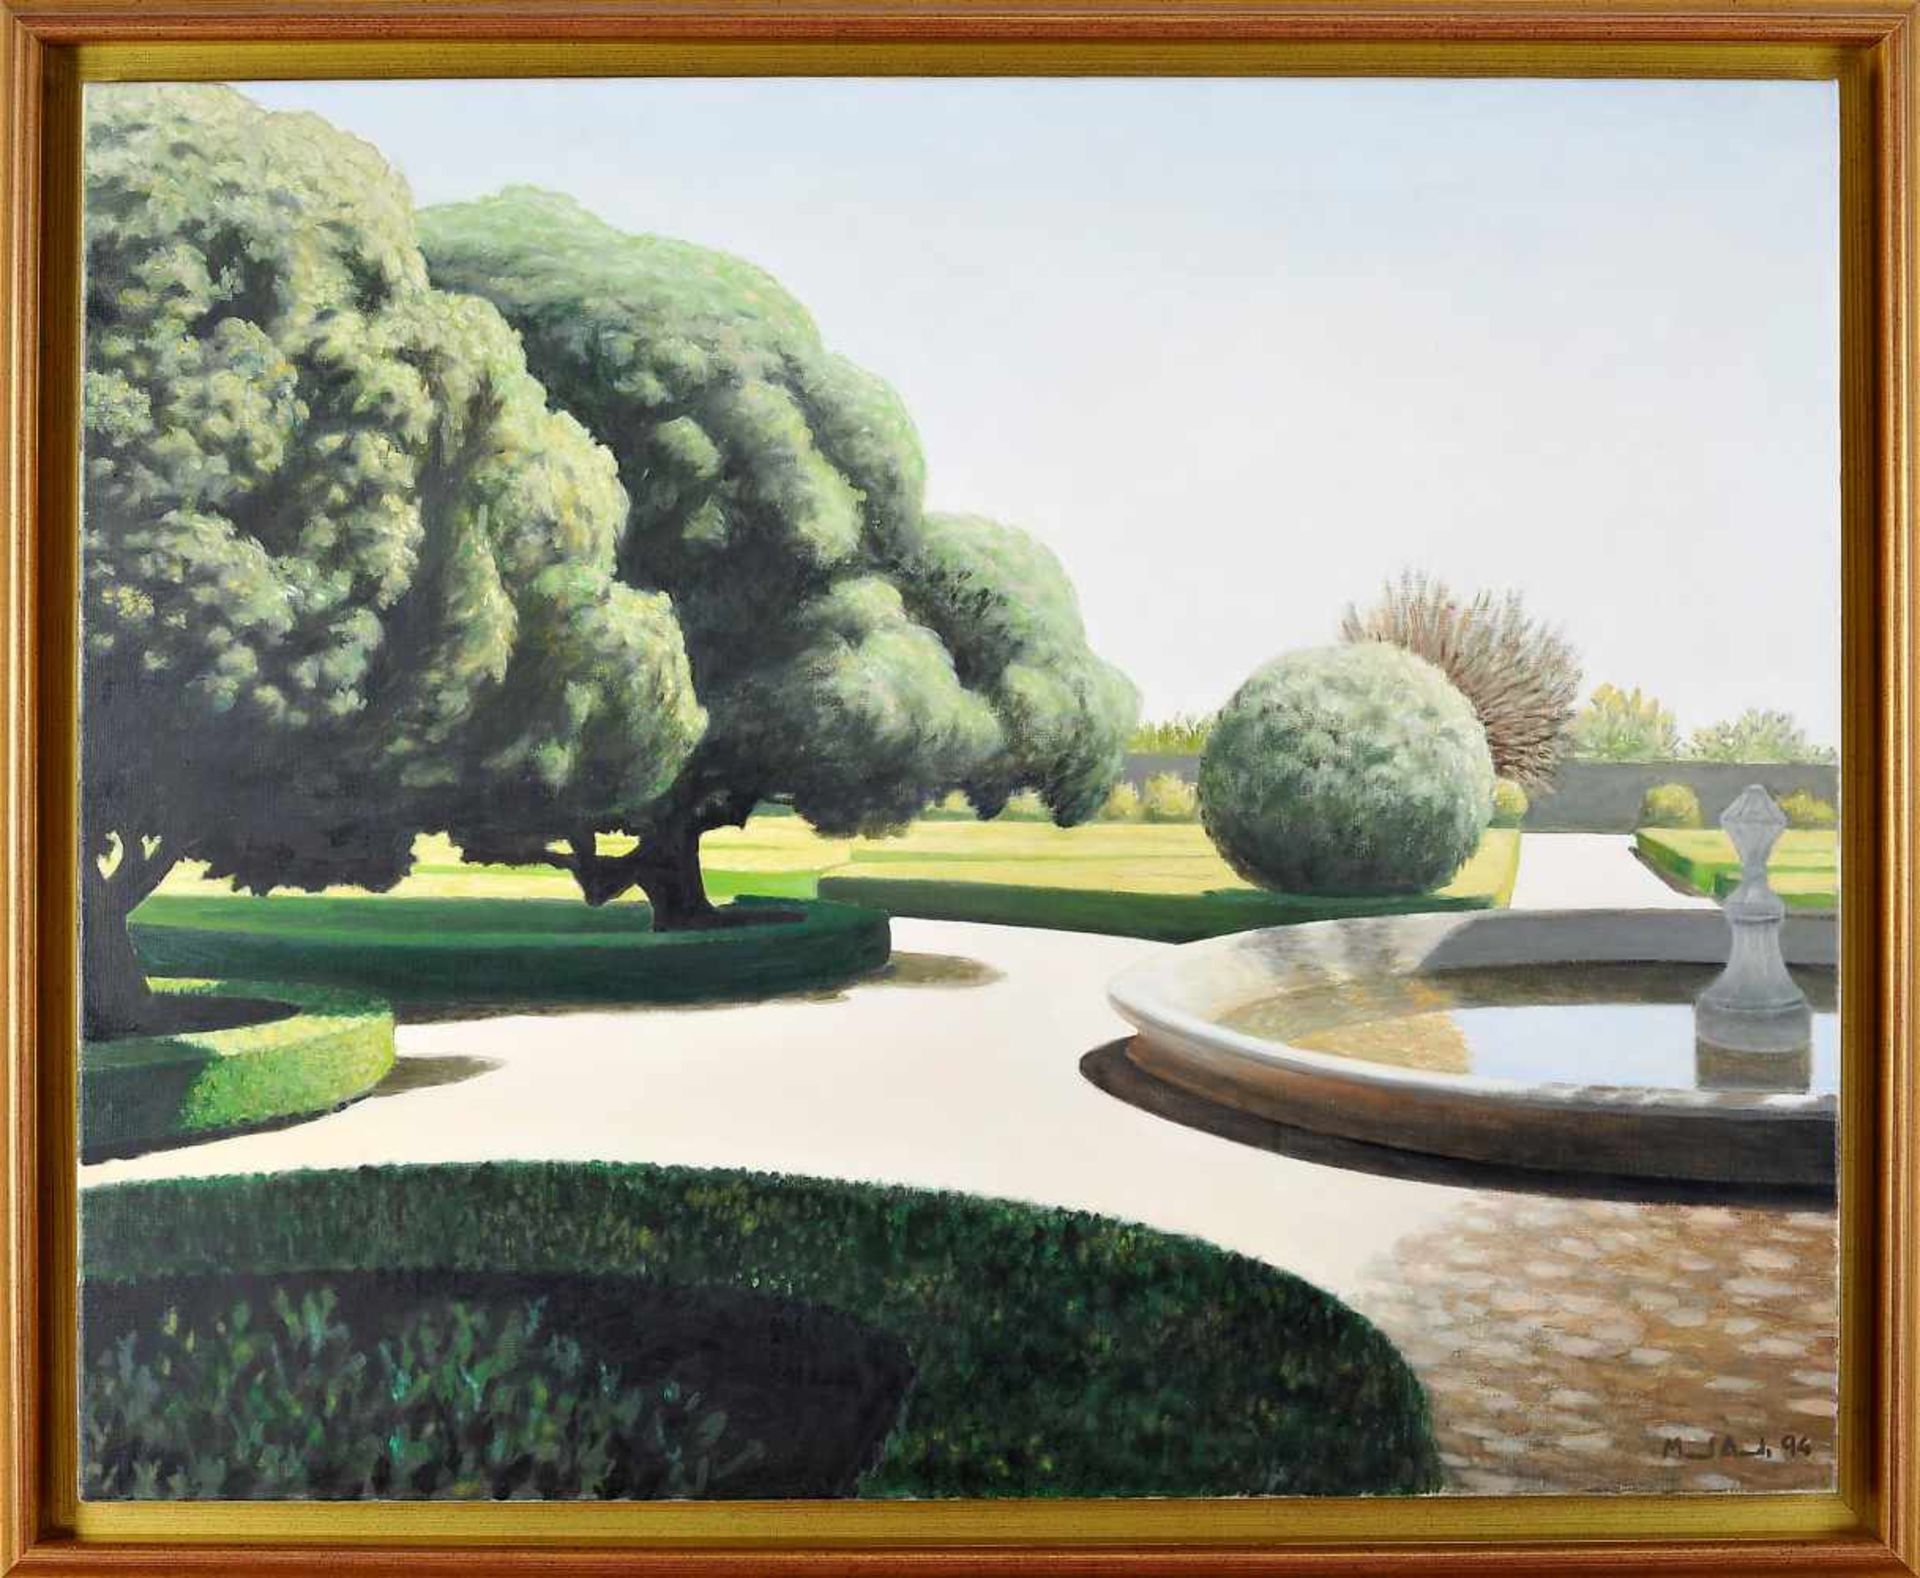 MANUEL AMADO - 1938-2019, "Jardim Botânico", oil on canvas, signed and dated 1994, Dim. - 81 x 100